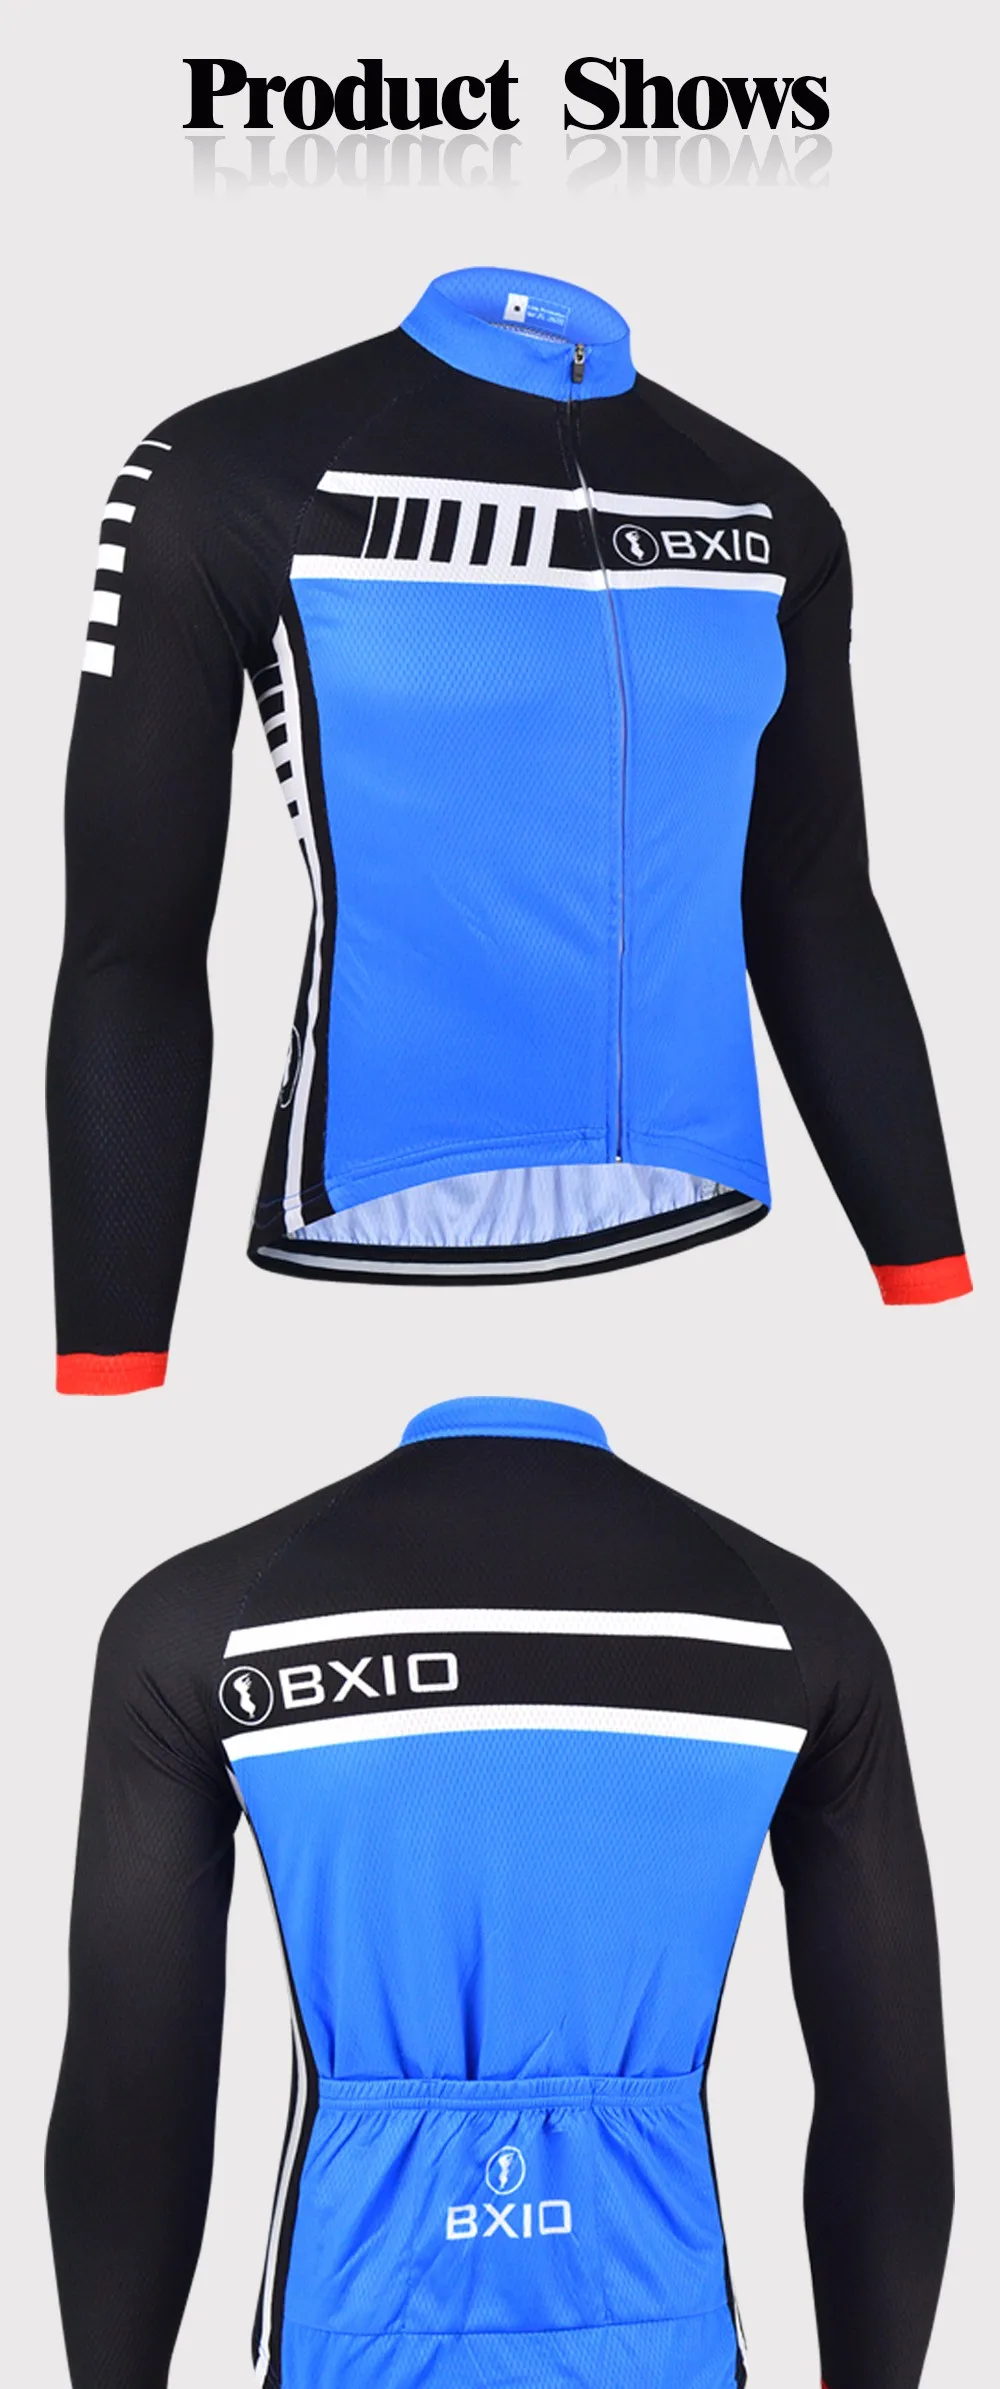 Bxio Велоспорт Джерси рубашка Ciclismo велосипед Bicicleta Велосипедная форма для Для мужчин горный велосипед Джерси wielerkleding топ скорость 94-j